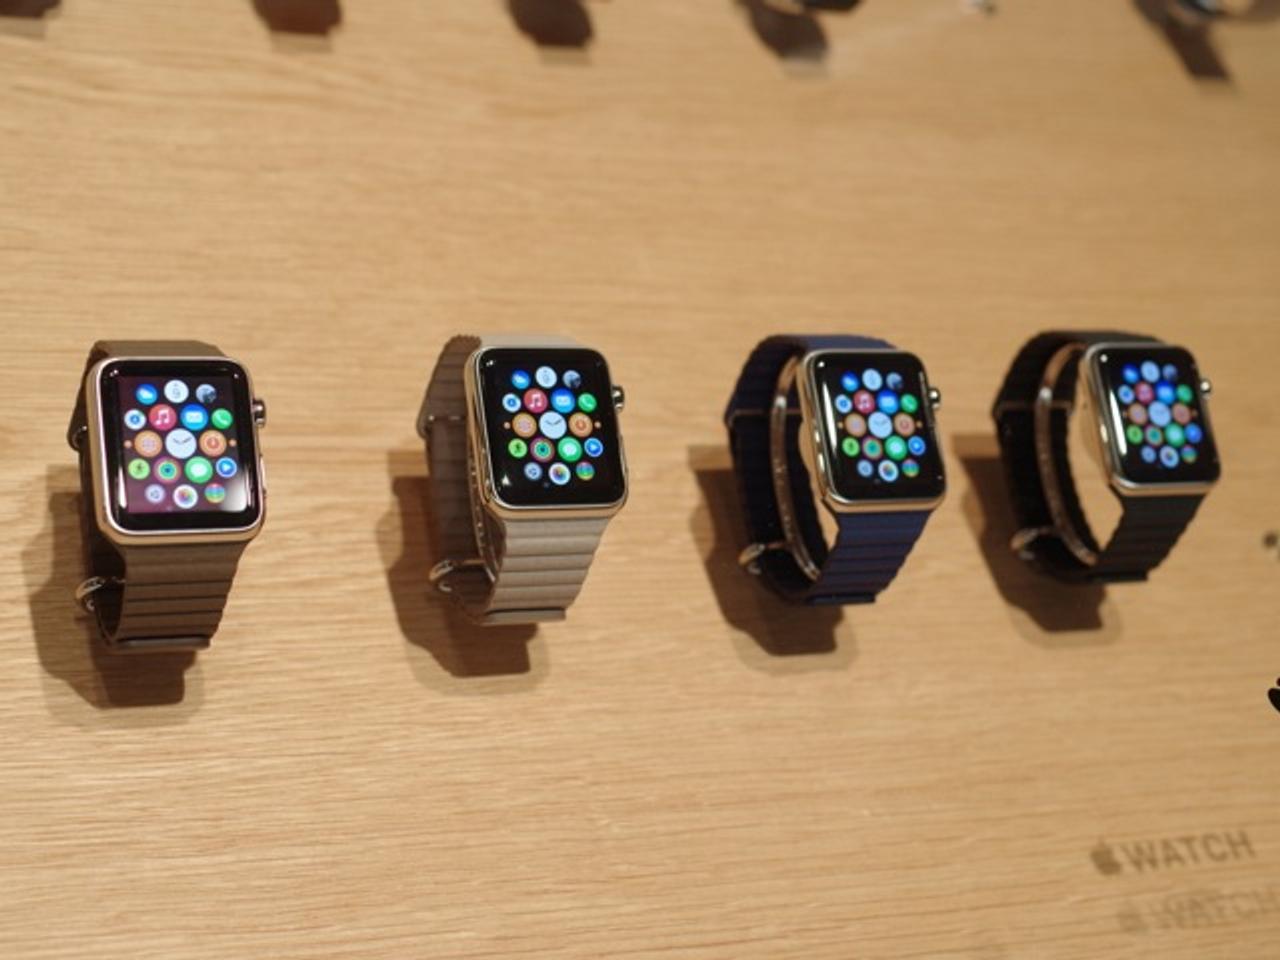 Apple Watchで終焉を迎え、次に幕開けするインフラ時代とは？